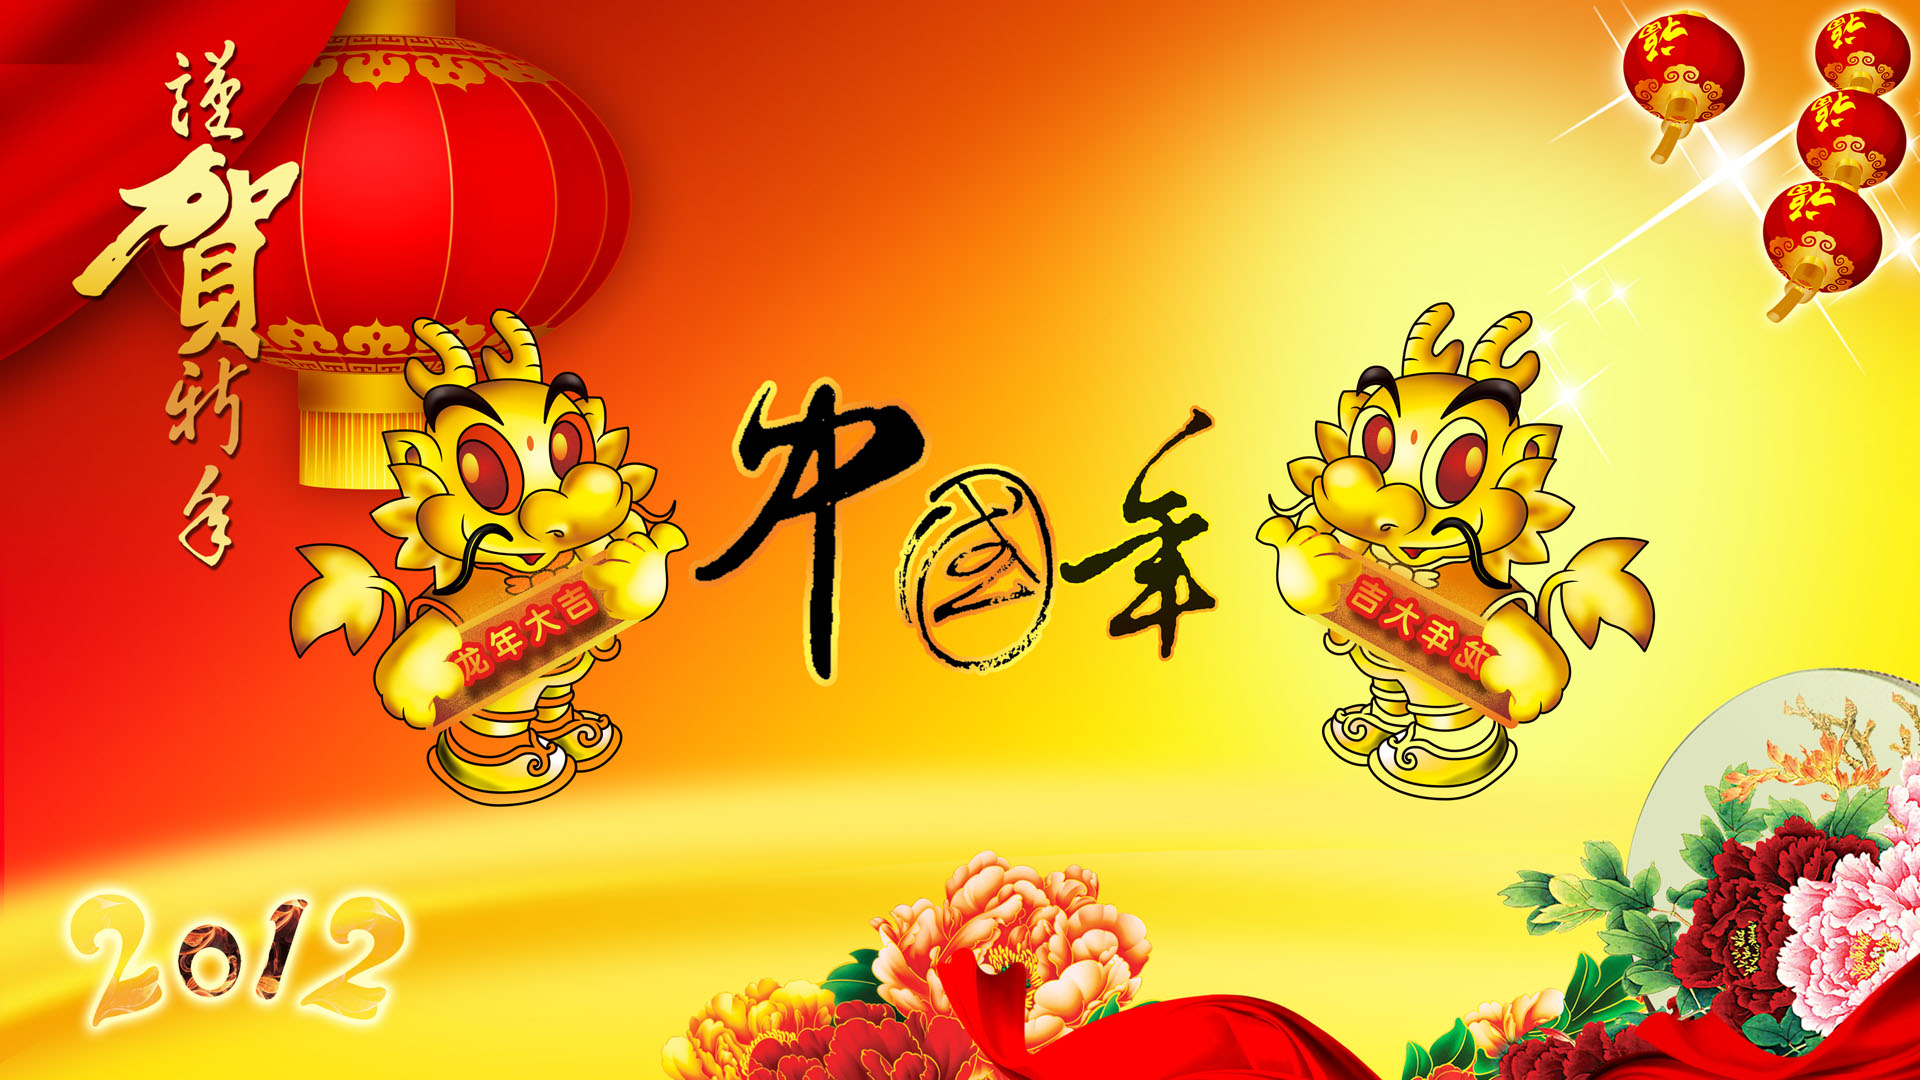 Happy Chinese New Year 2012 New Year desktop wallpaper